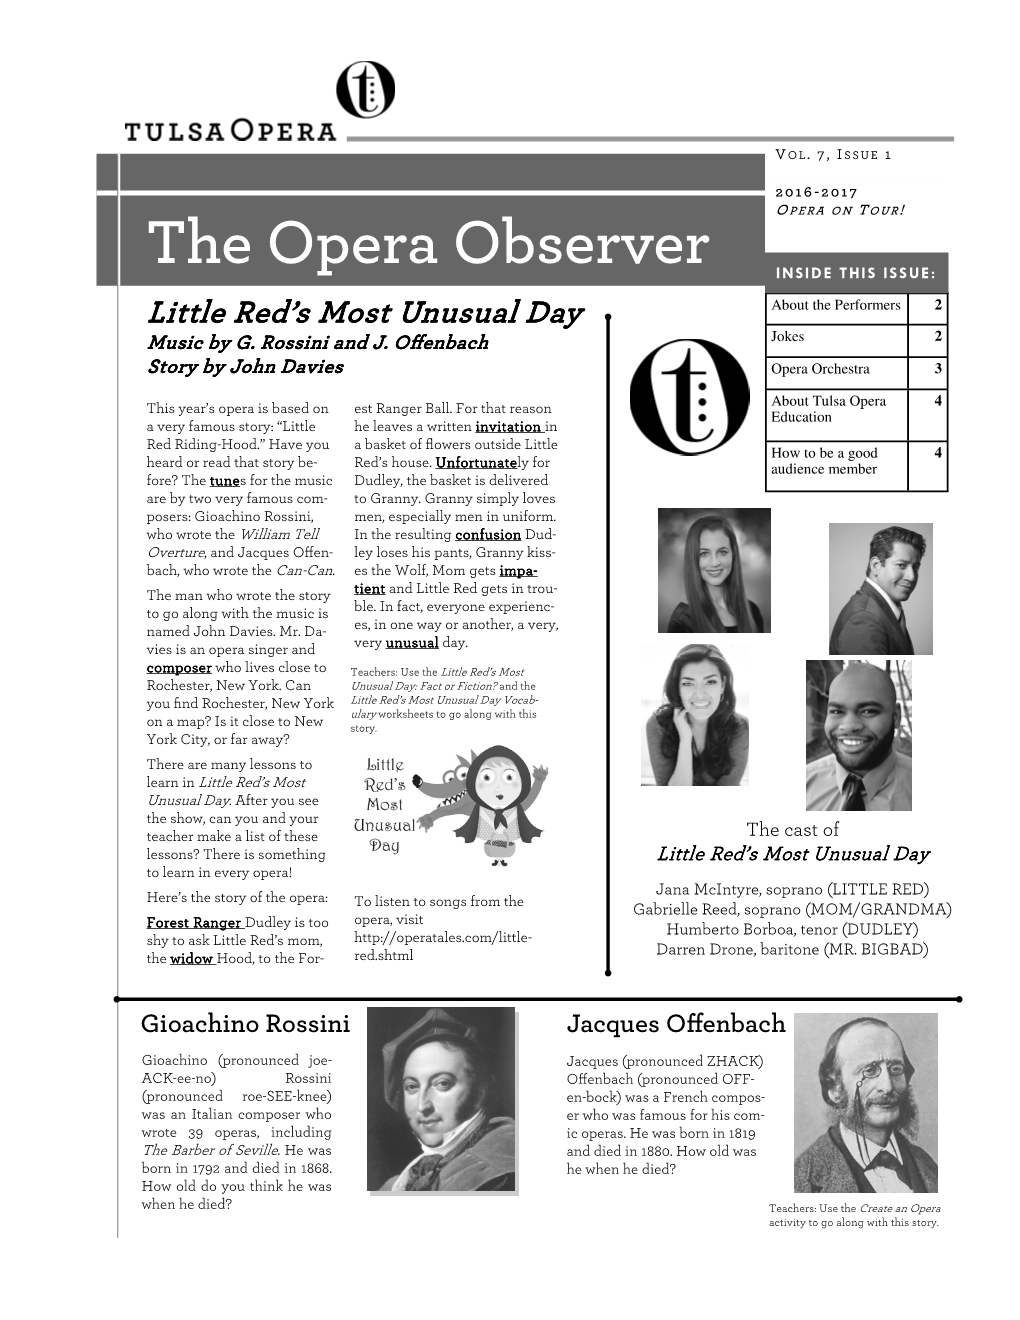 The Opera Observer Little